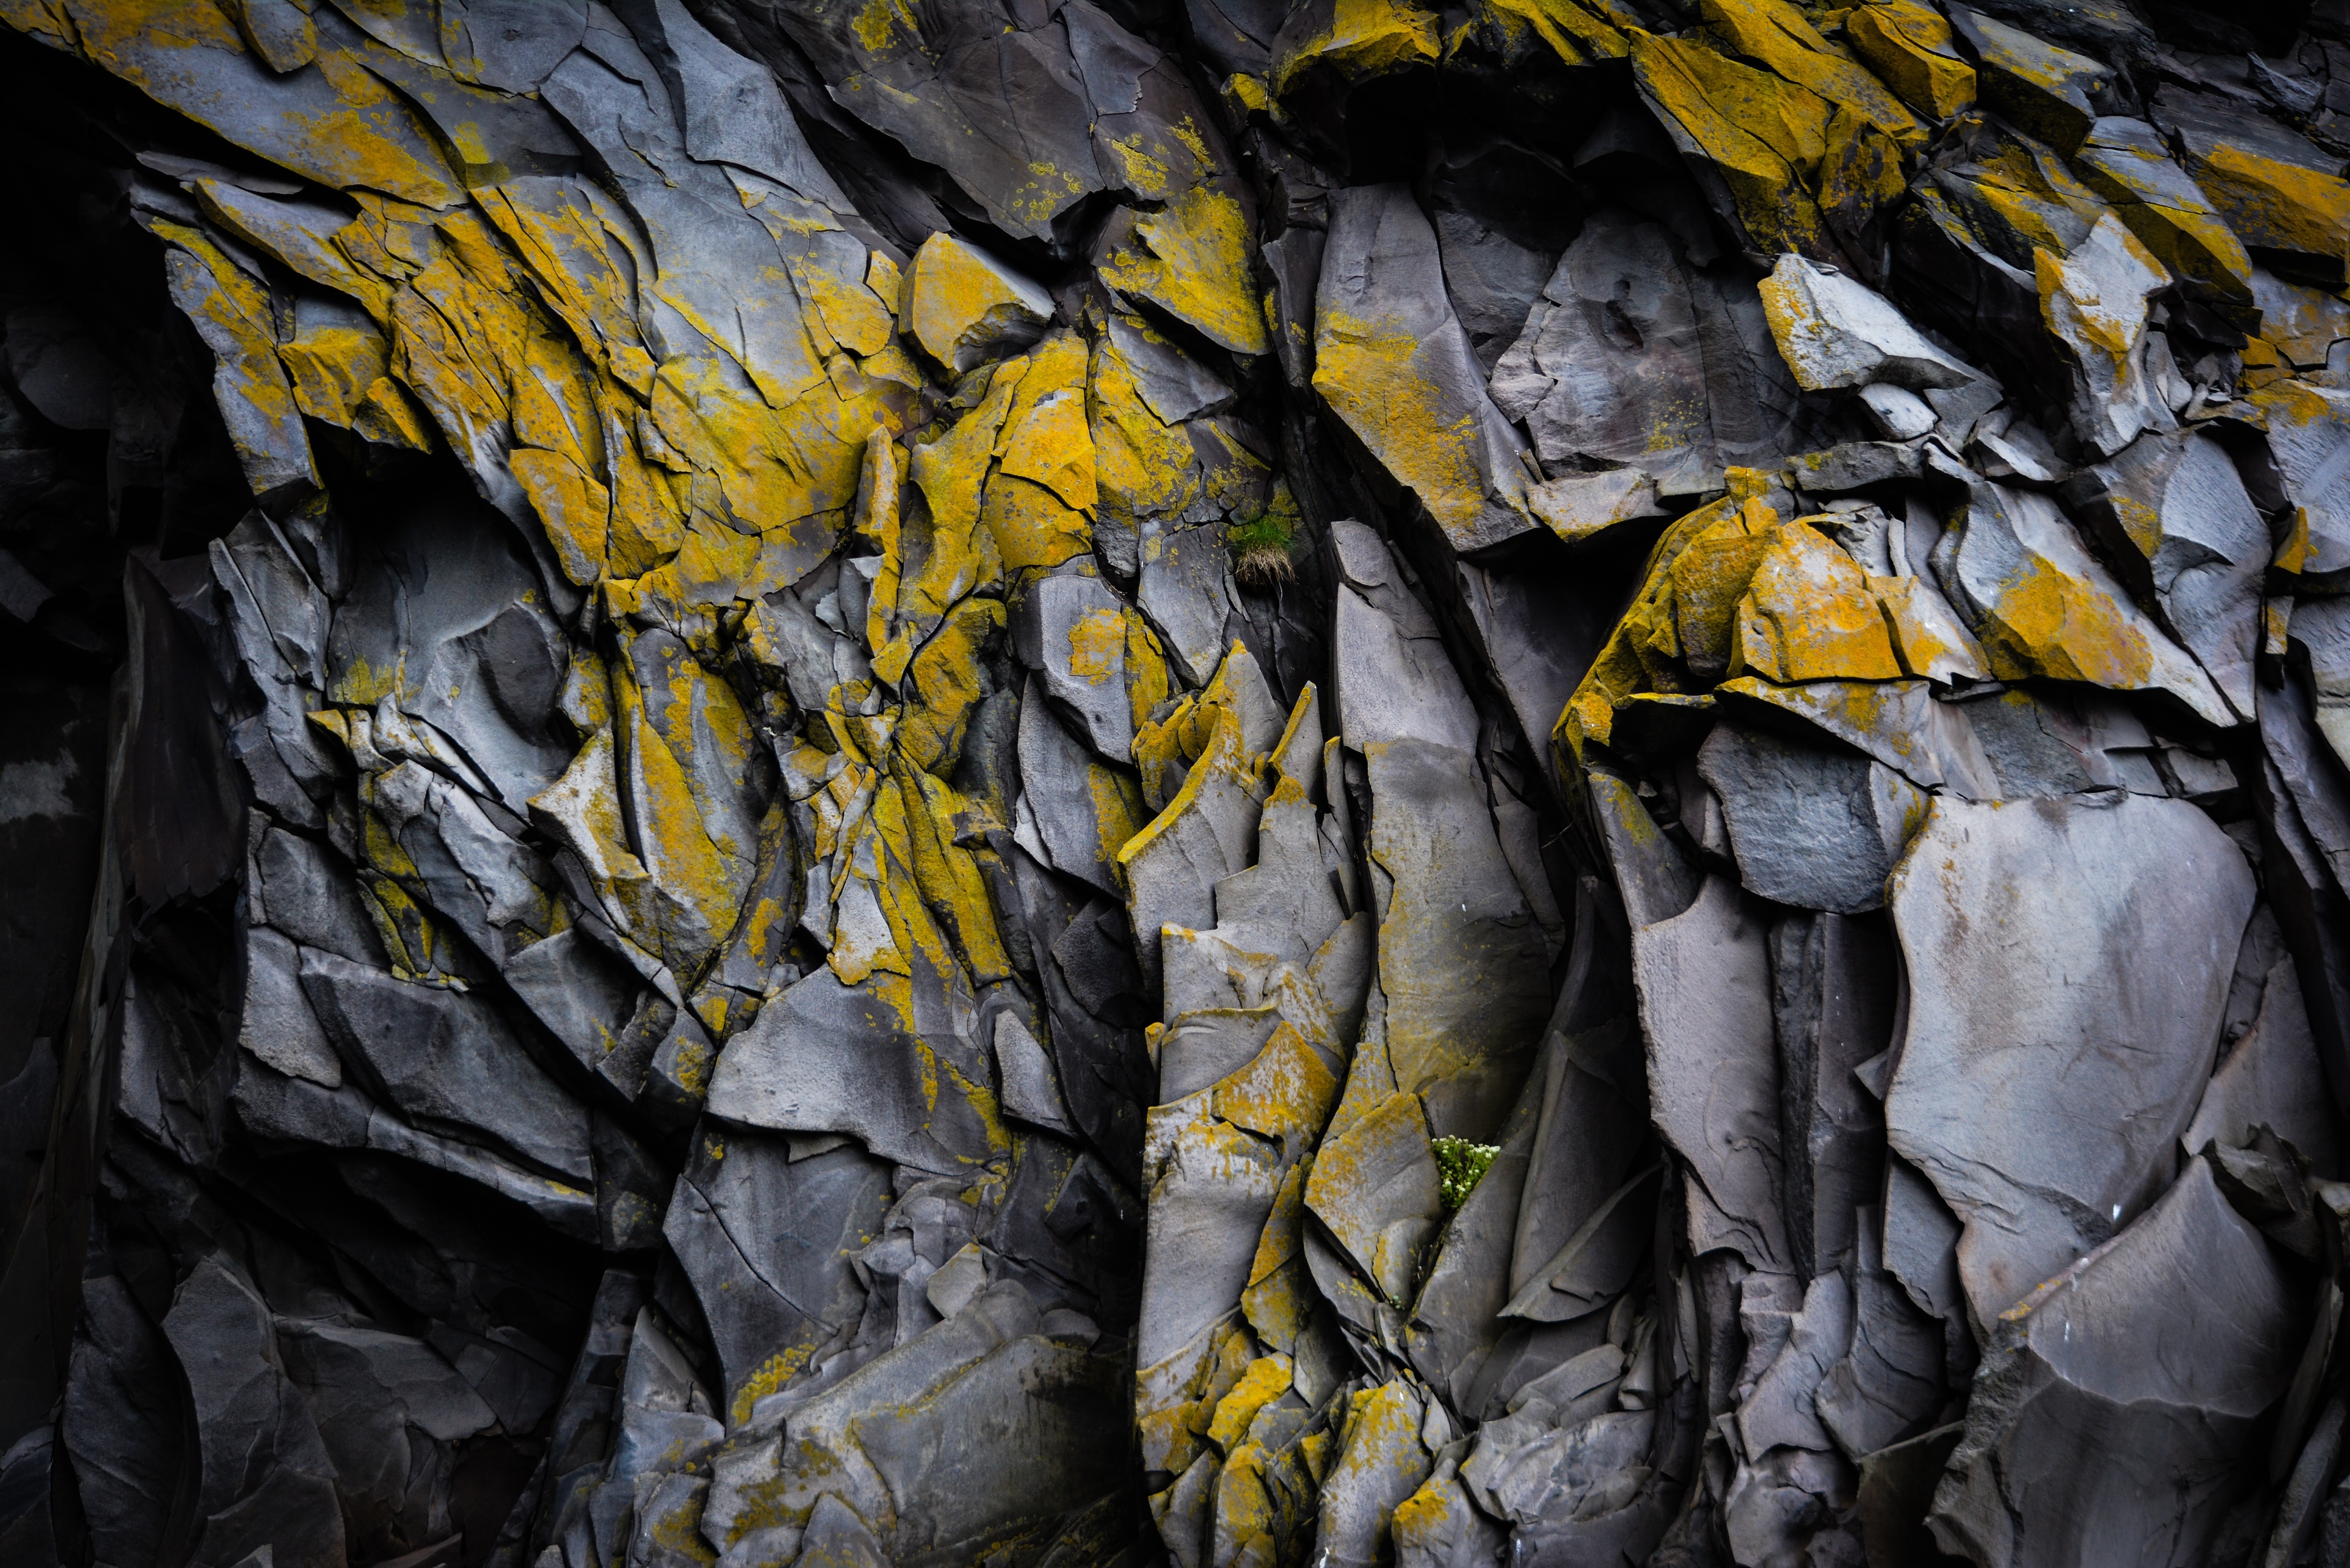 gray and yellow rocks